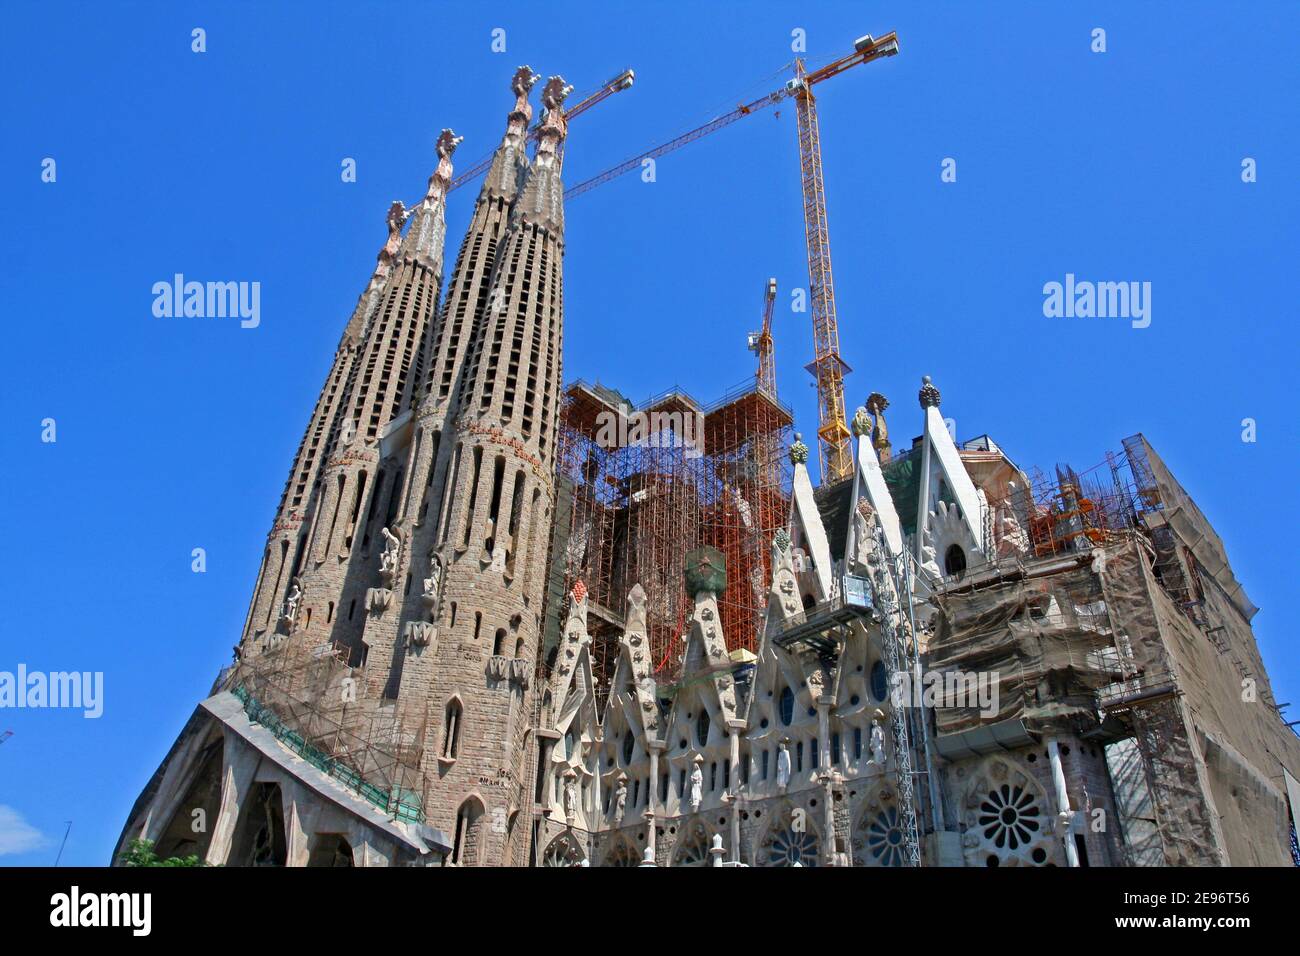 Sagrada Familia in Barcelona, Spain. Impressive cathedral designed by ...